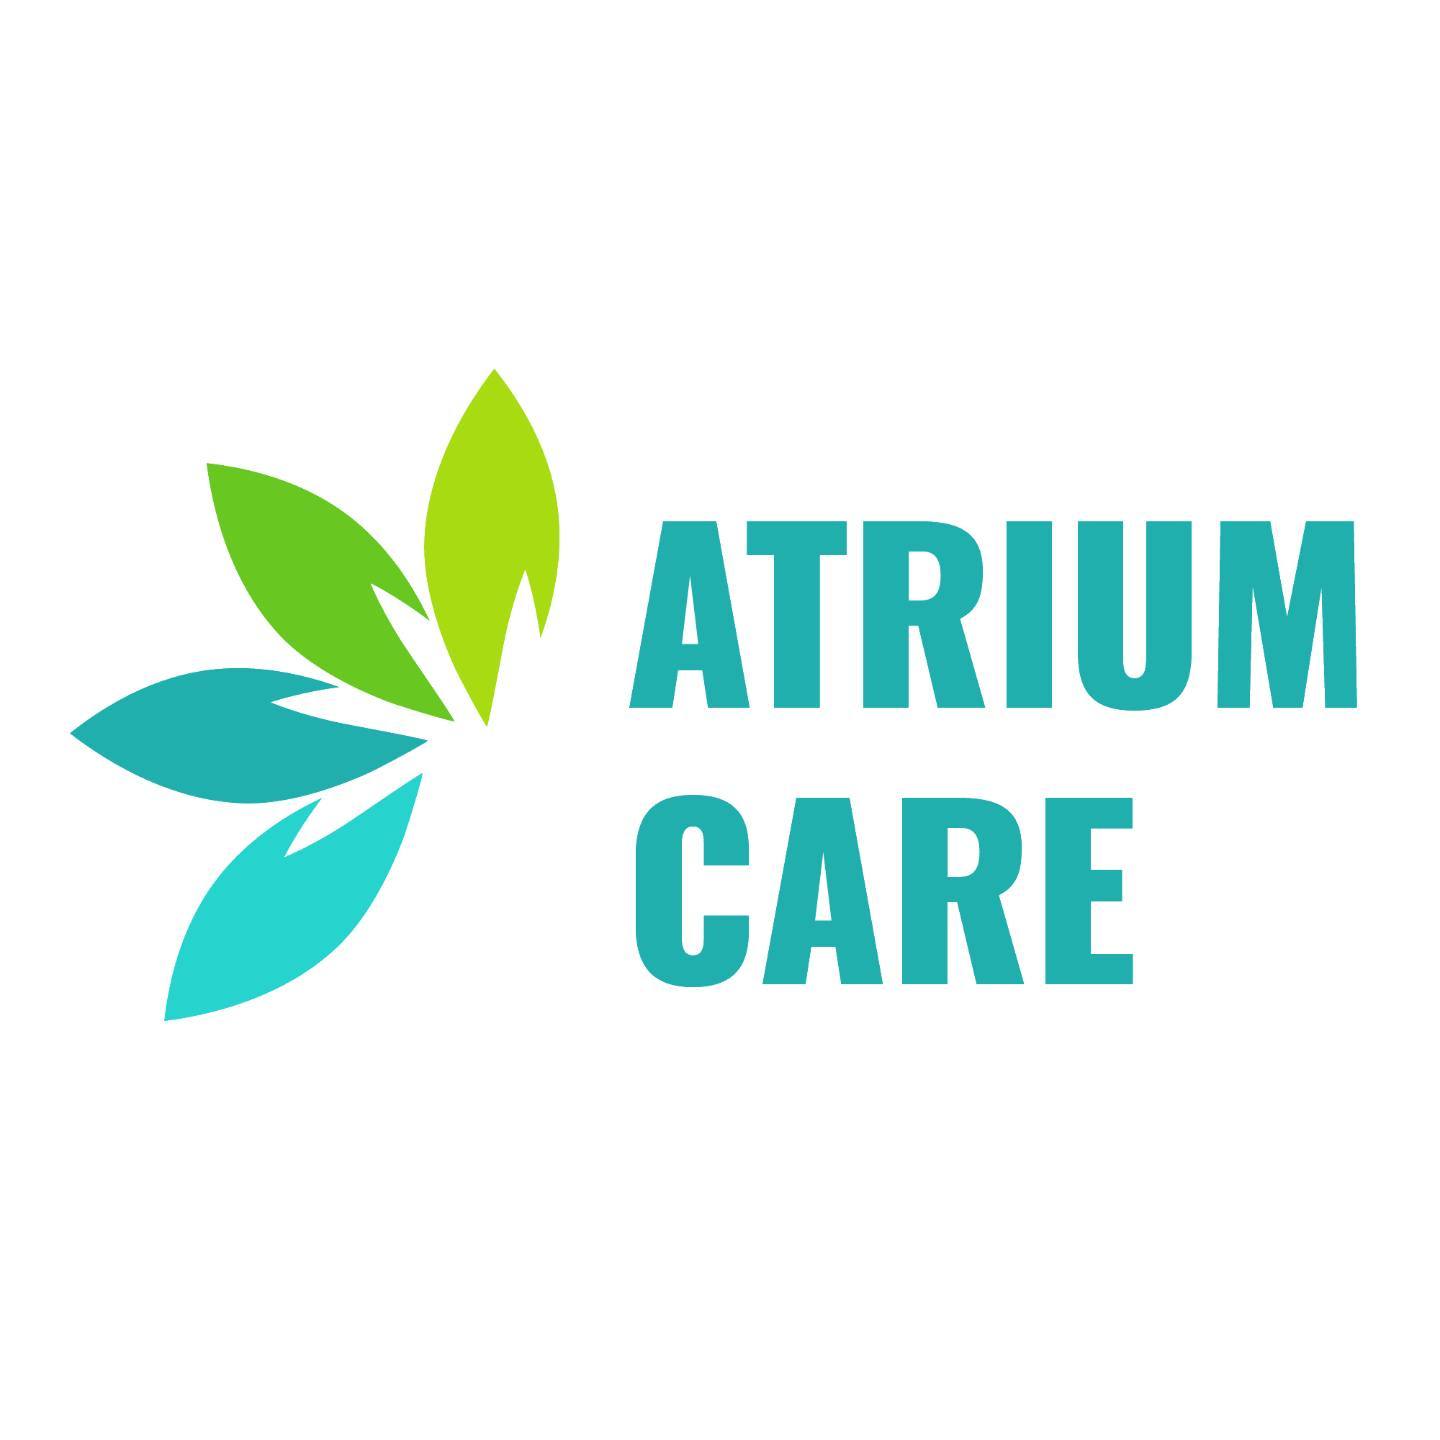 Logo designed for a care home provider in Orpington